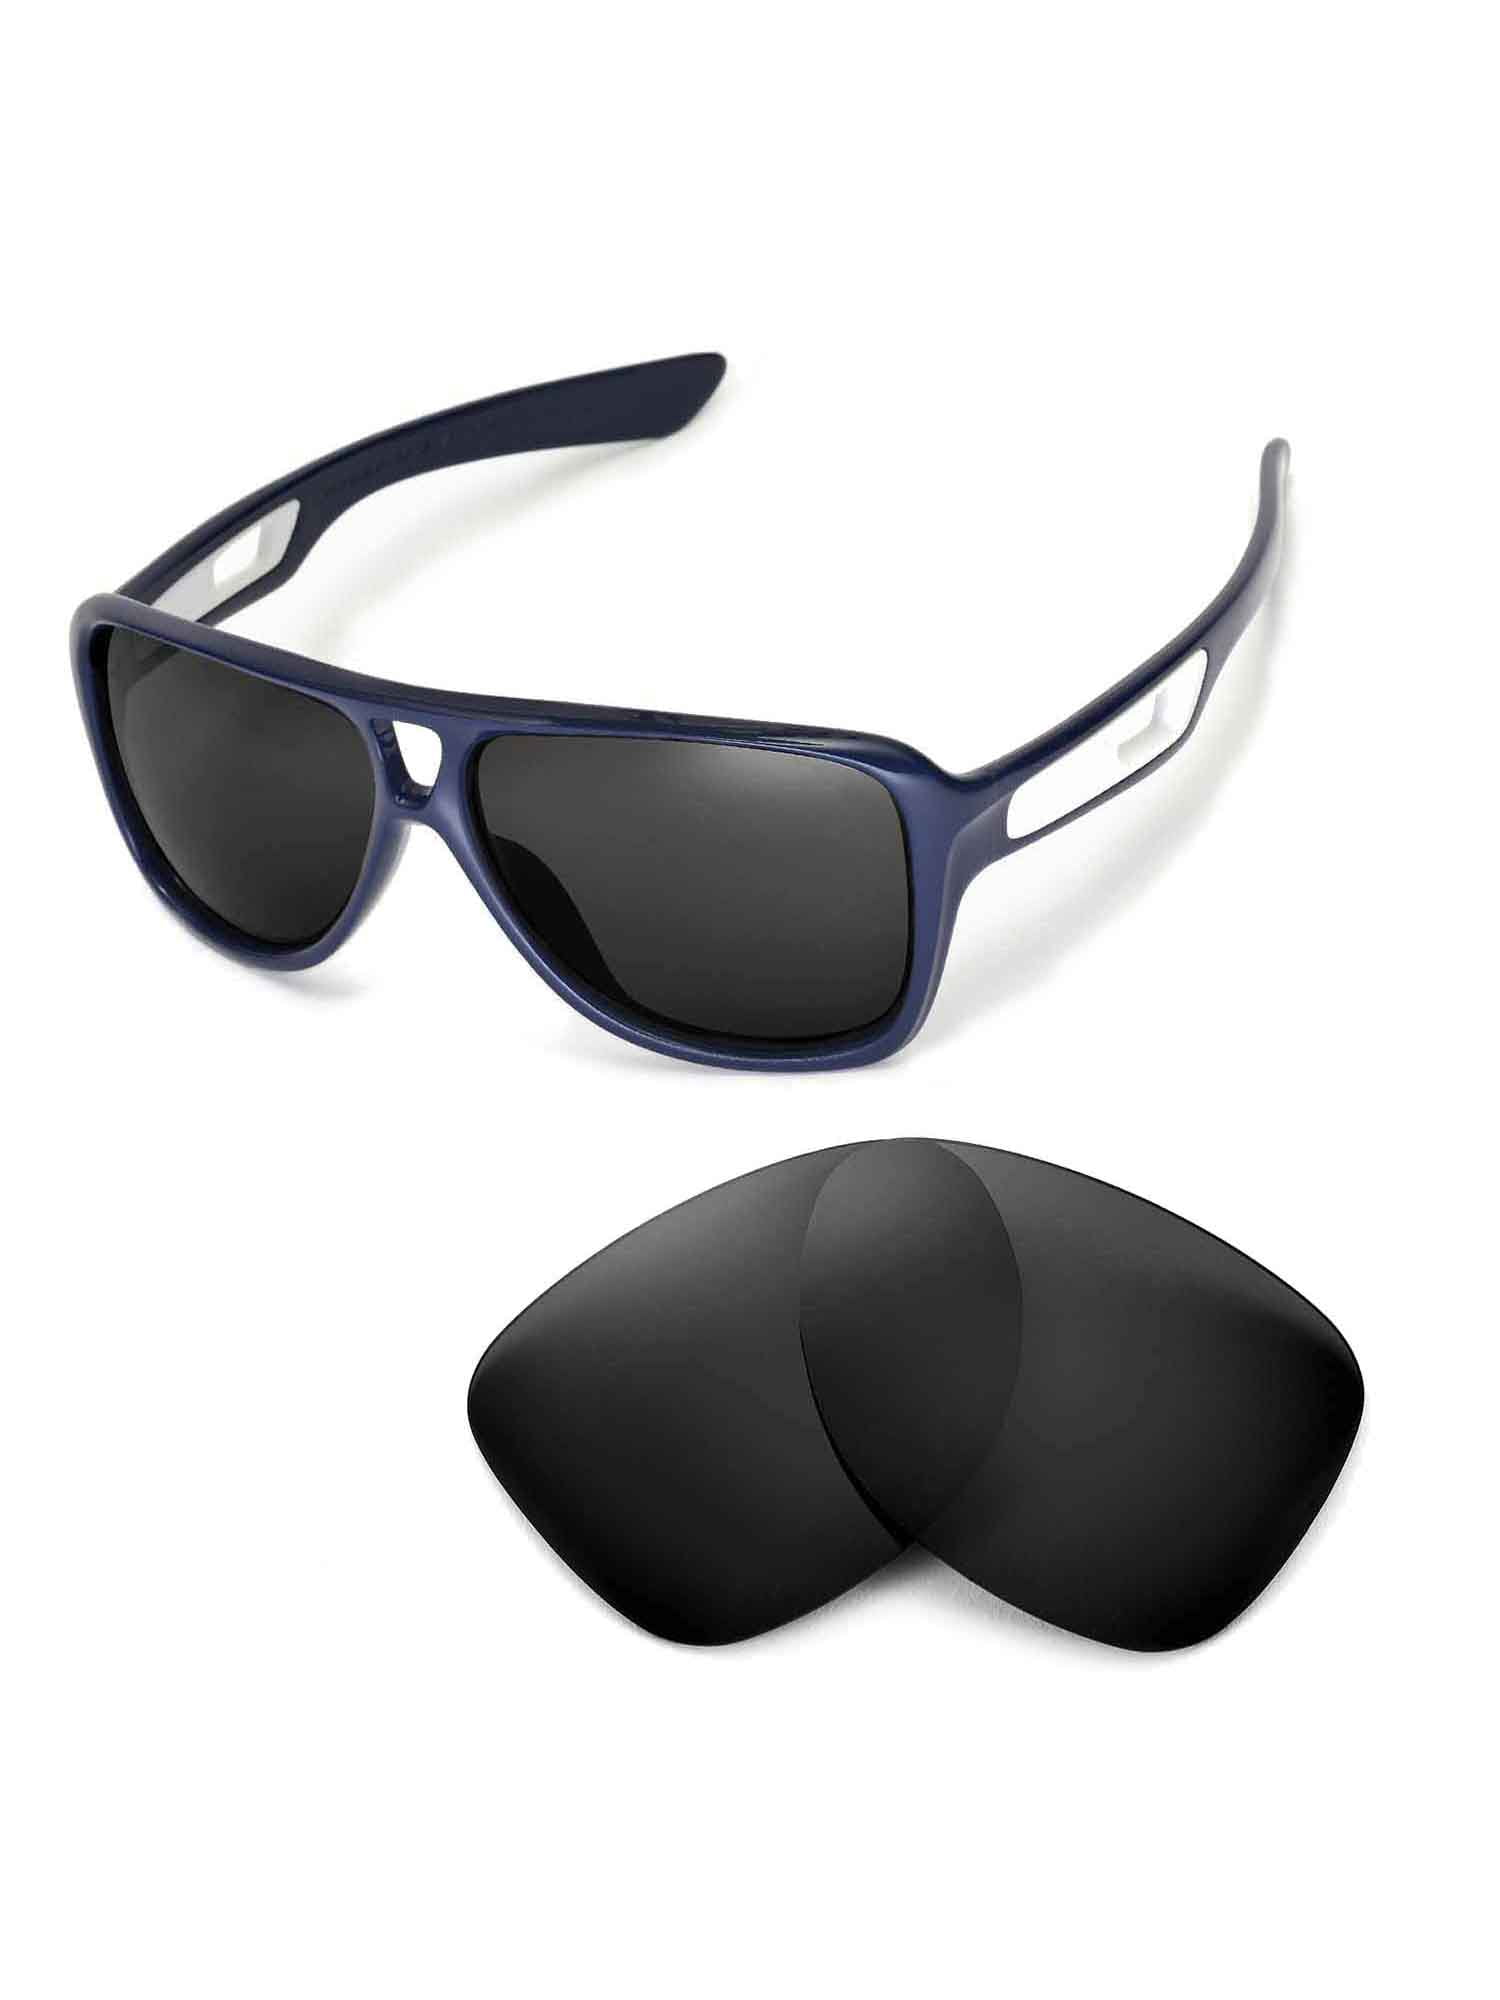 Walleva Black Polarized Replacement Lenses for Dispatch Sunglasses Walmart.com